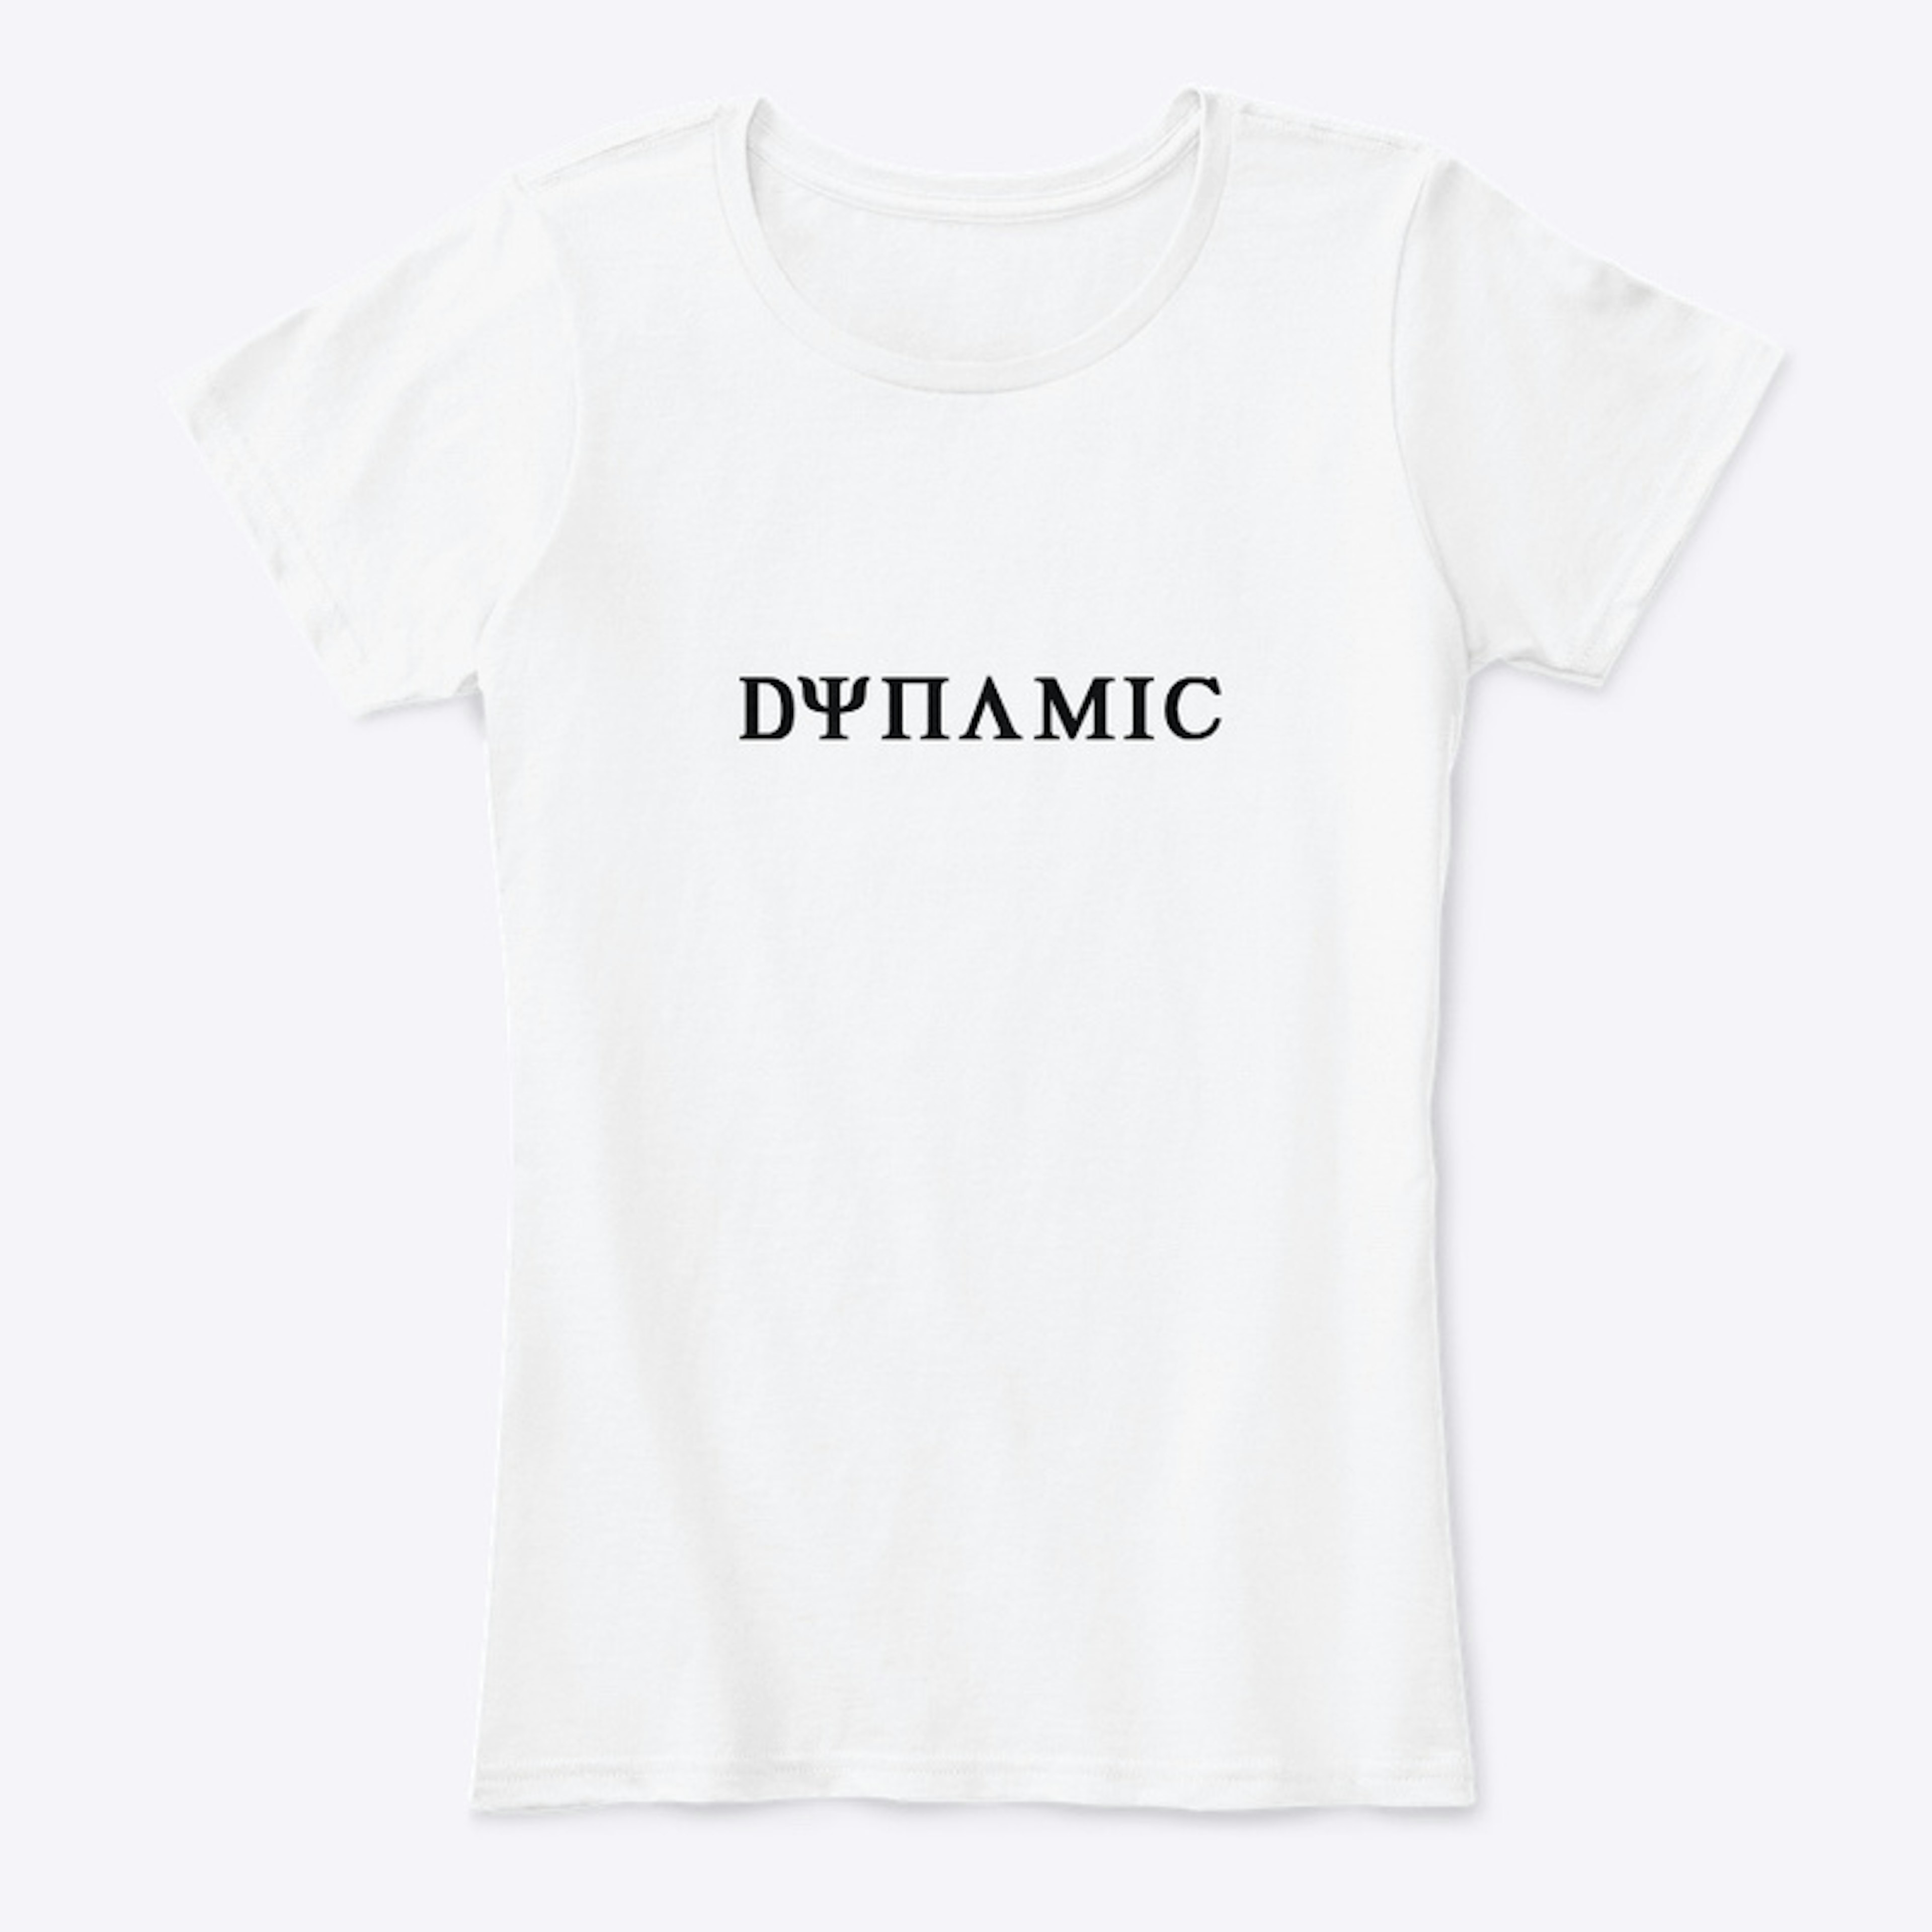 DYNAMIC Themed Items